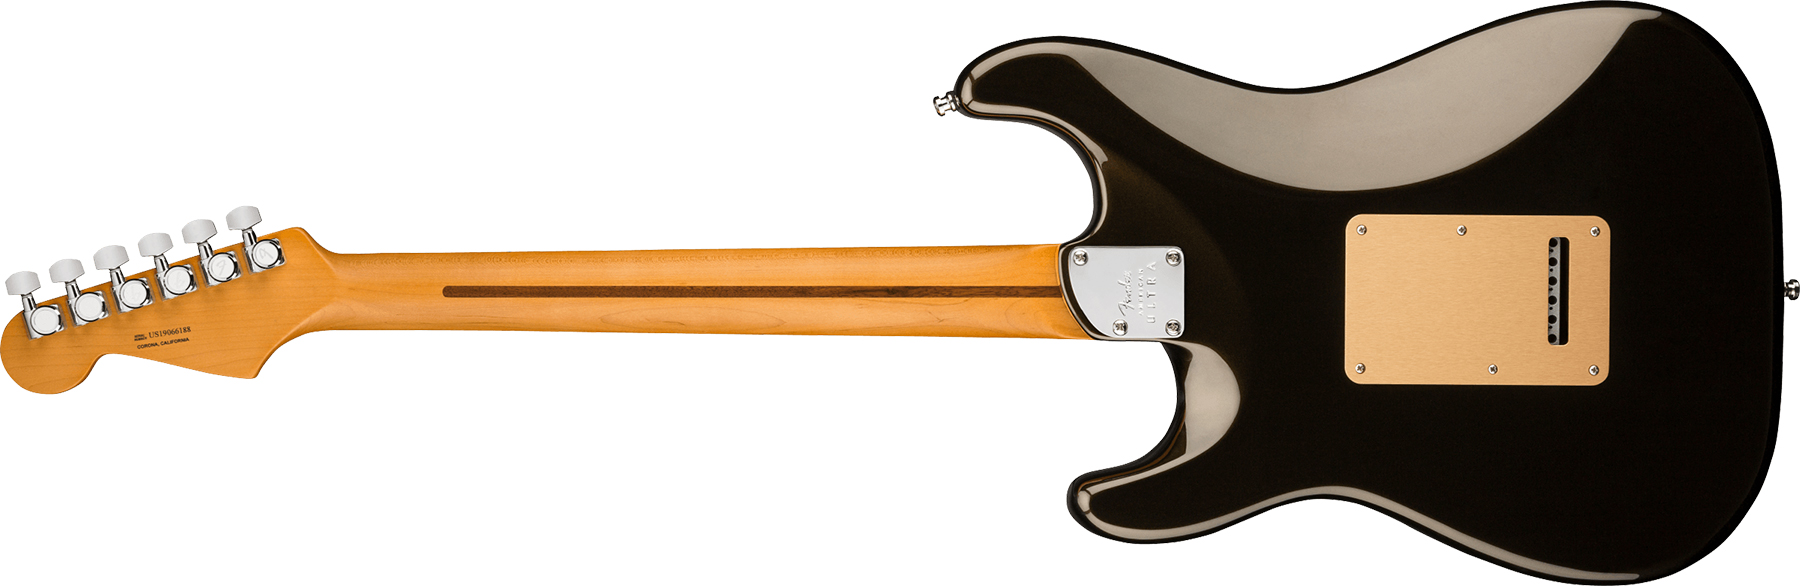 Fender Strat American Ultra 2019 Usa Mn - Texas Tea - Str shape electric guitar - Variation 1